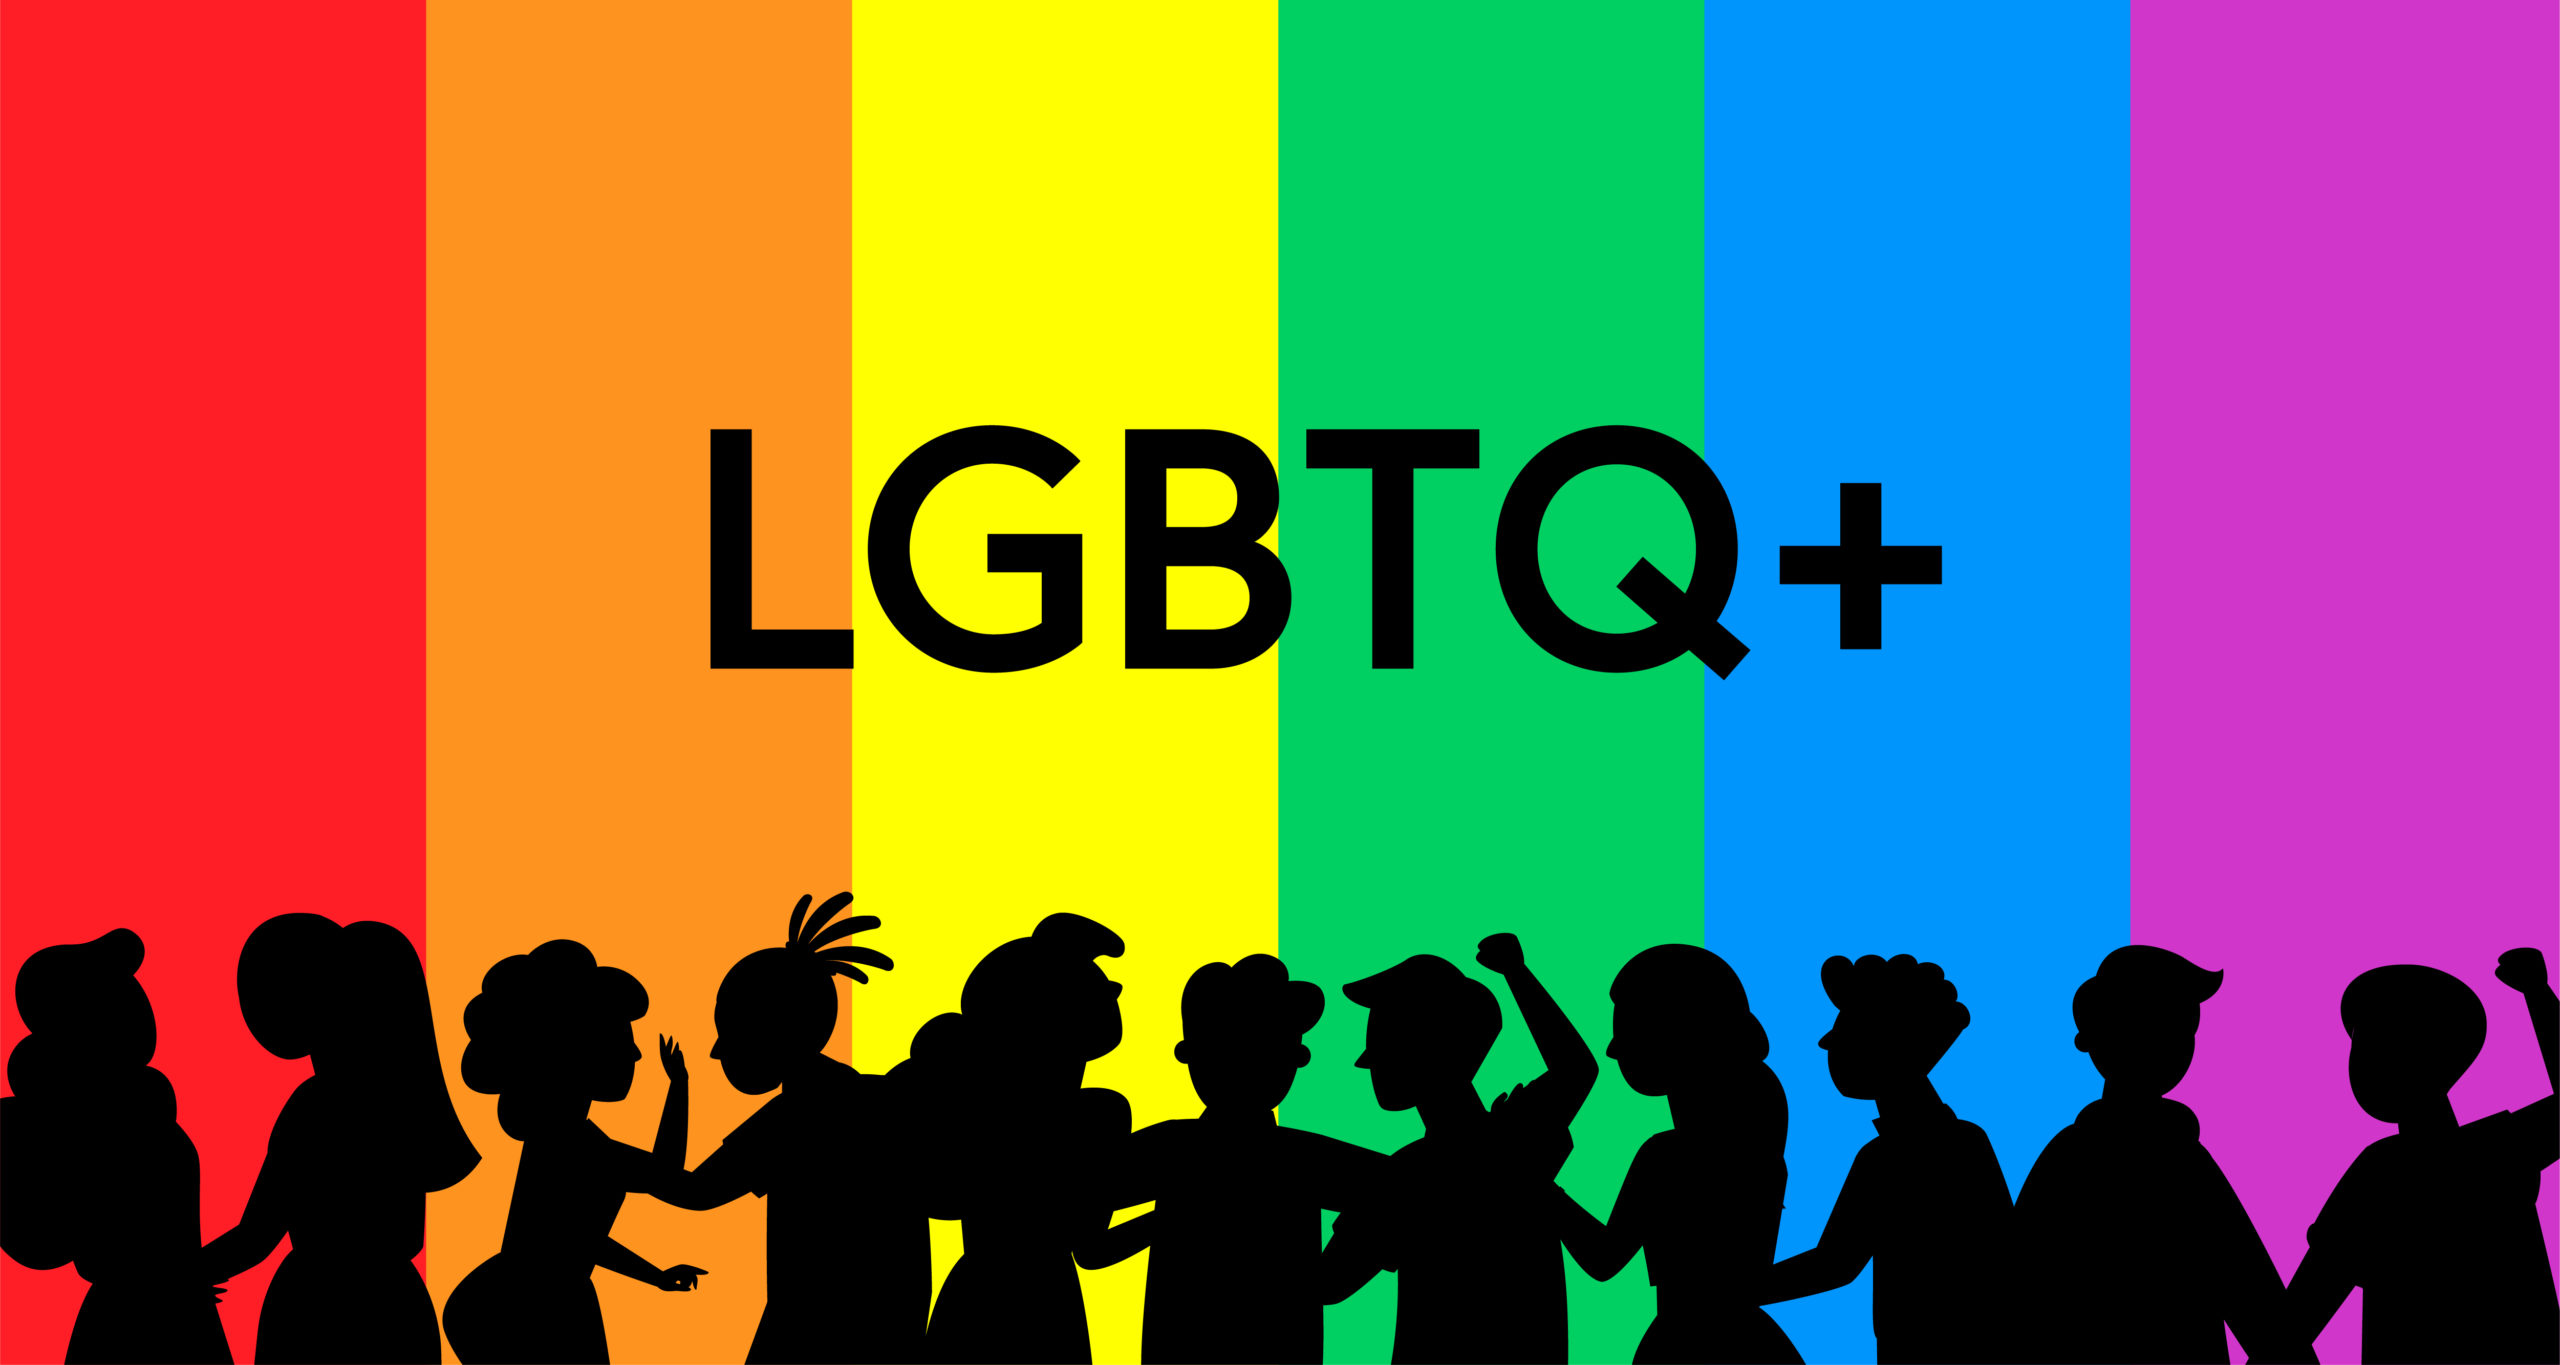 LGBTQ+ Flag vector created by jcomp - www.freepik.com